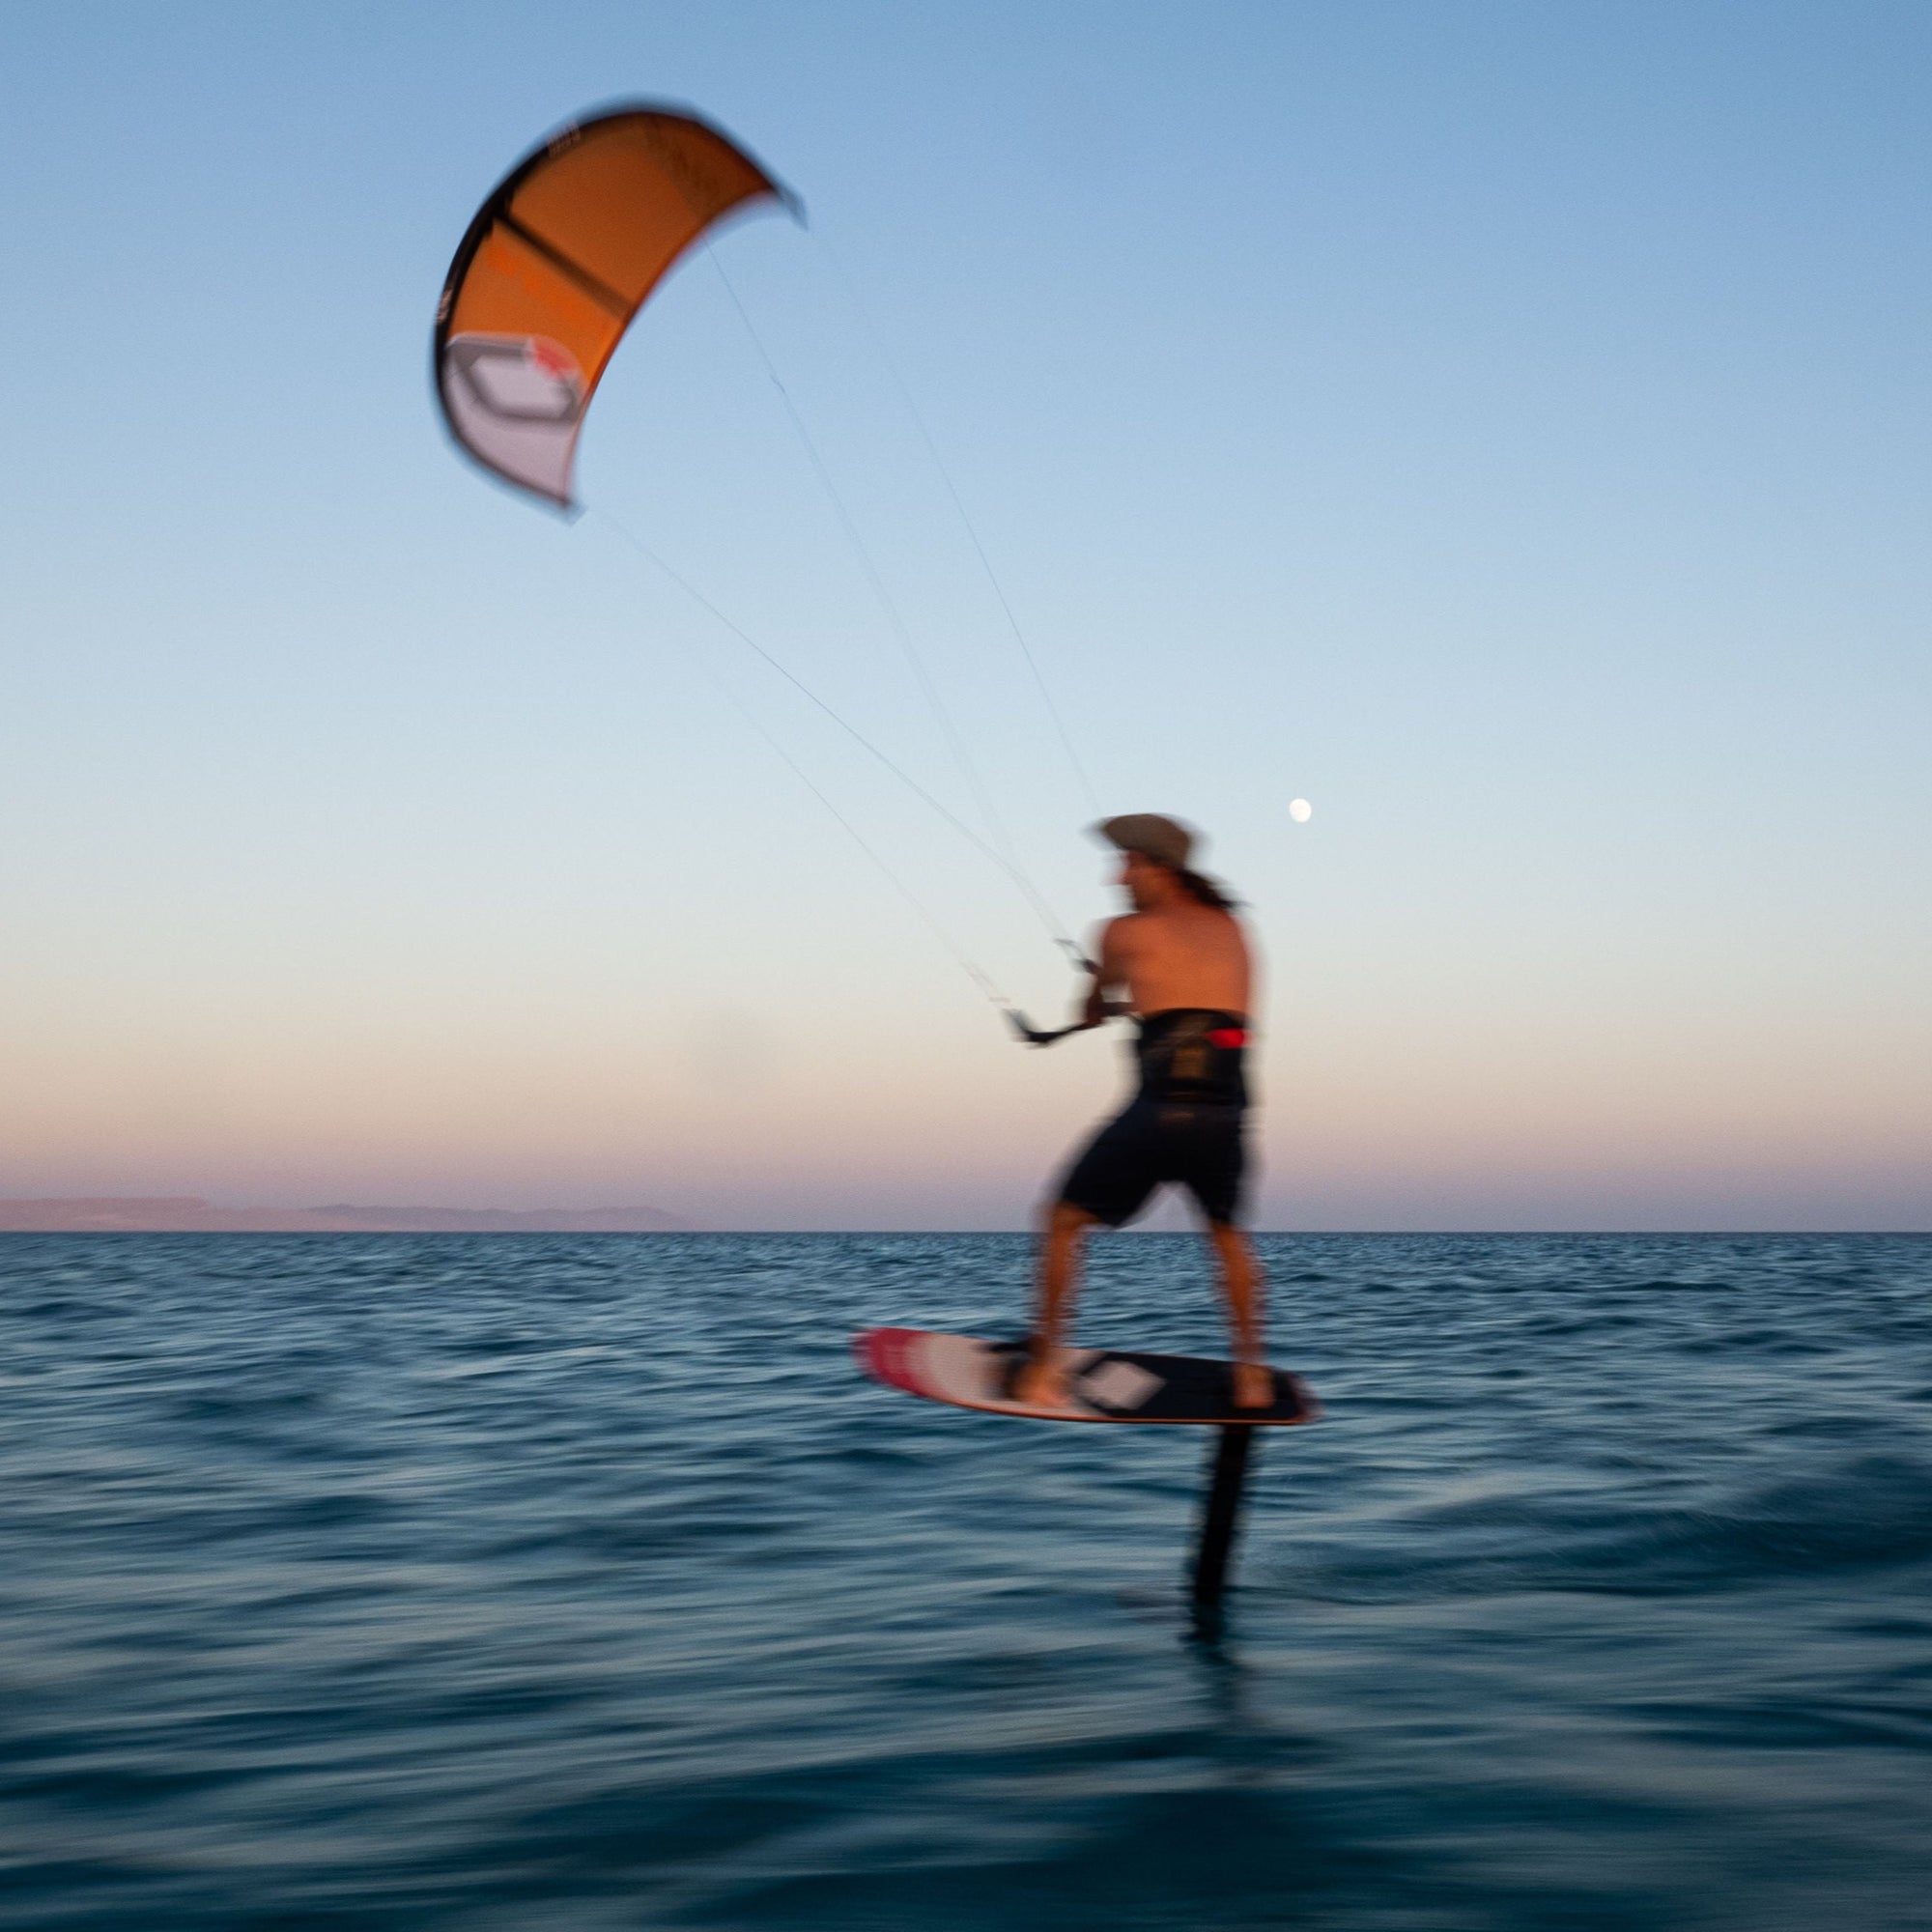 Ozone Apex V1 hydrofoil Kitesurfing foil and board